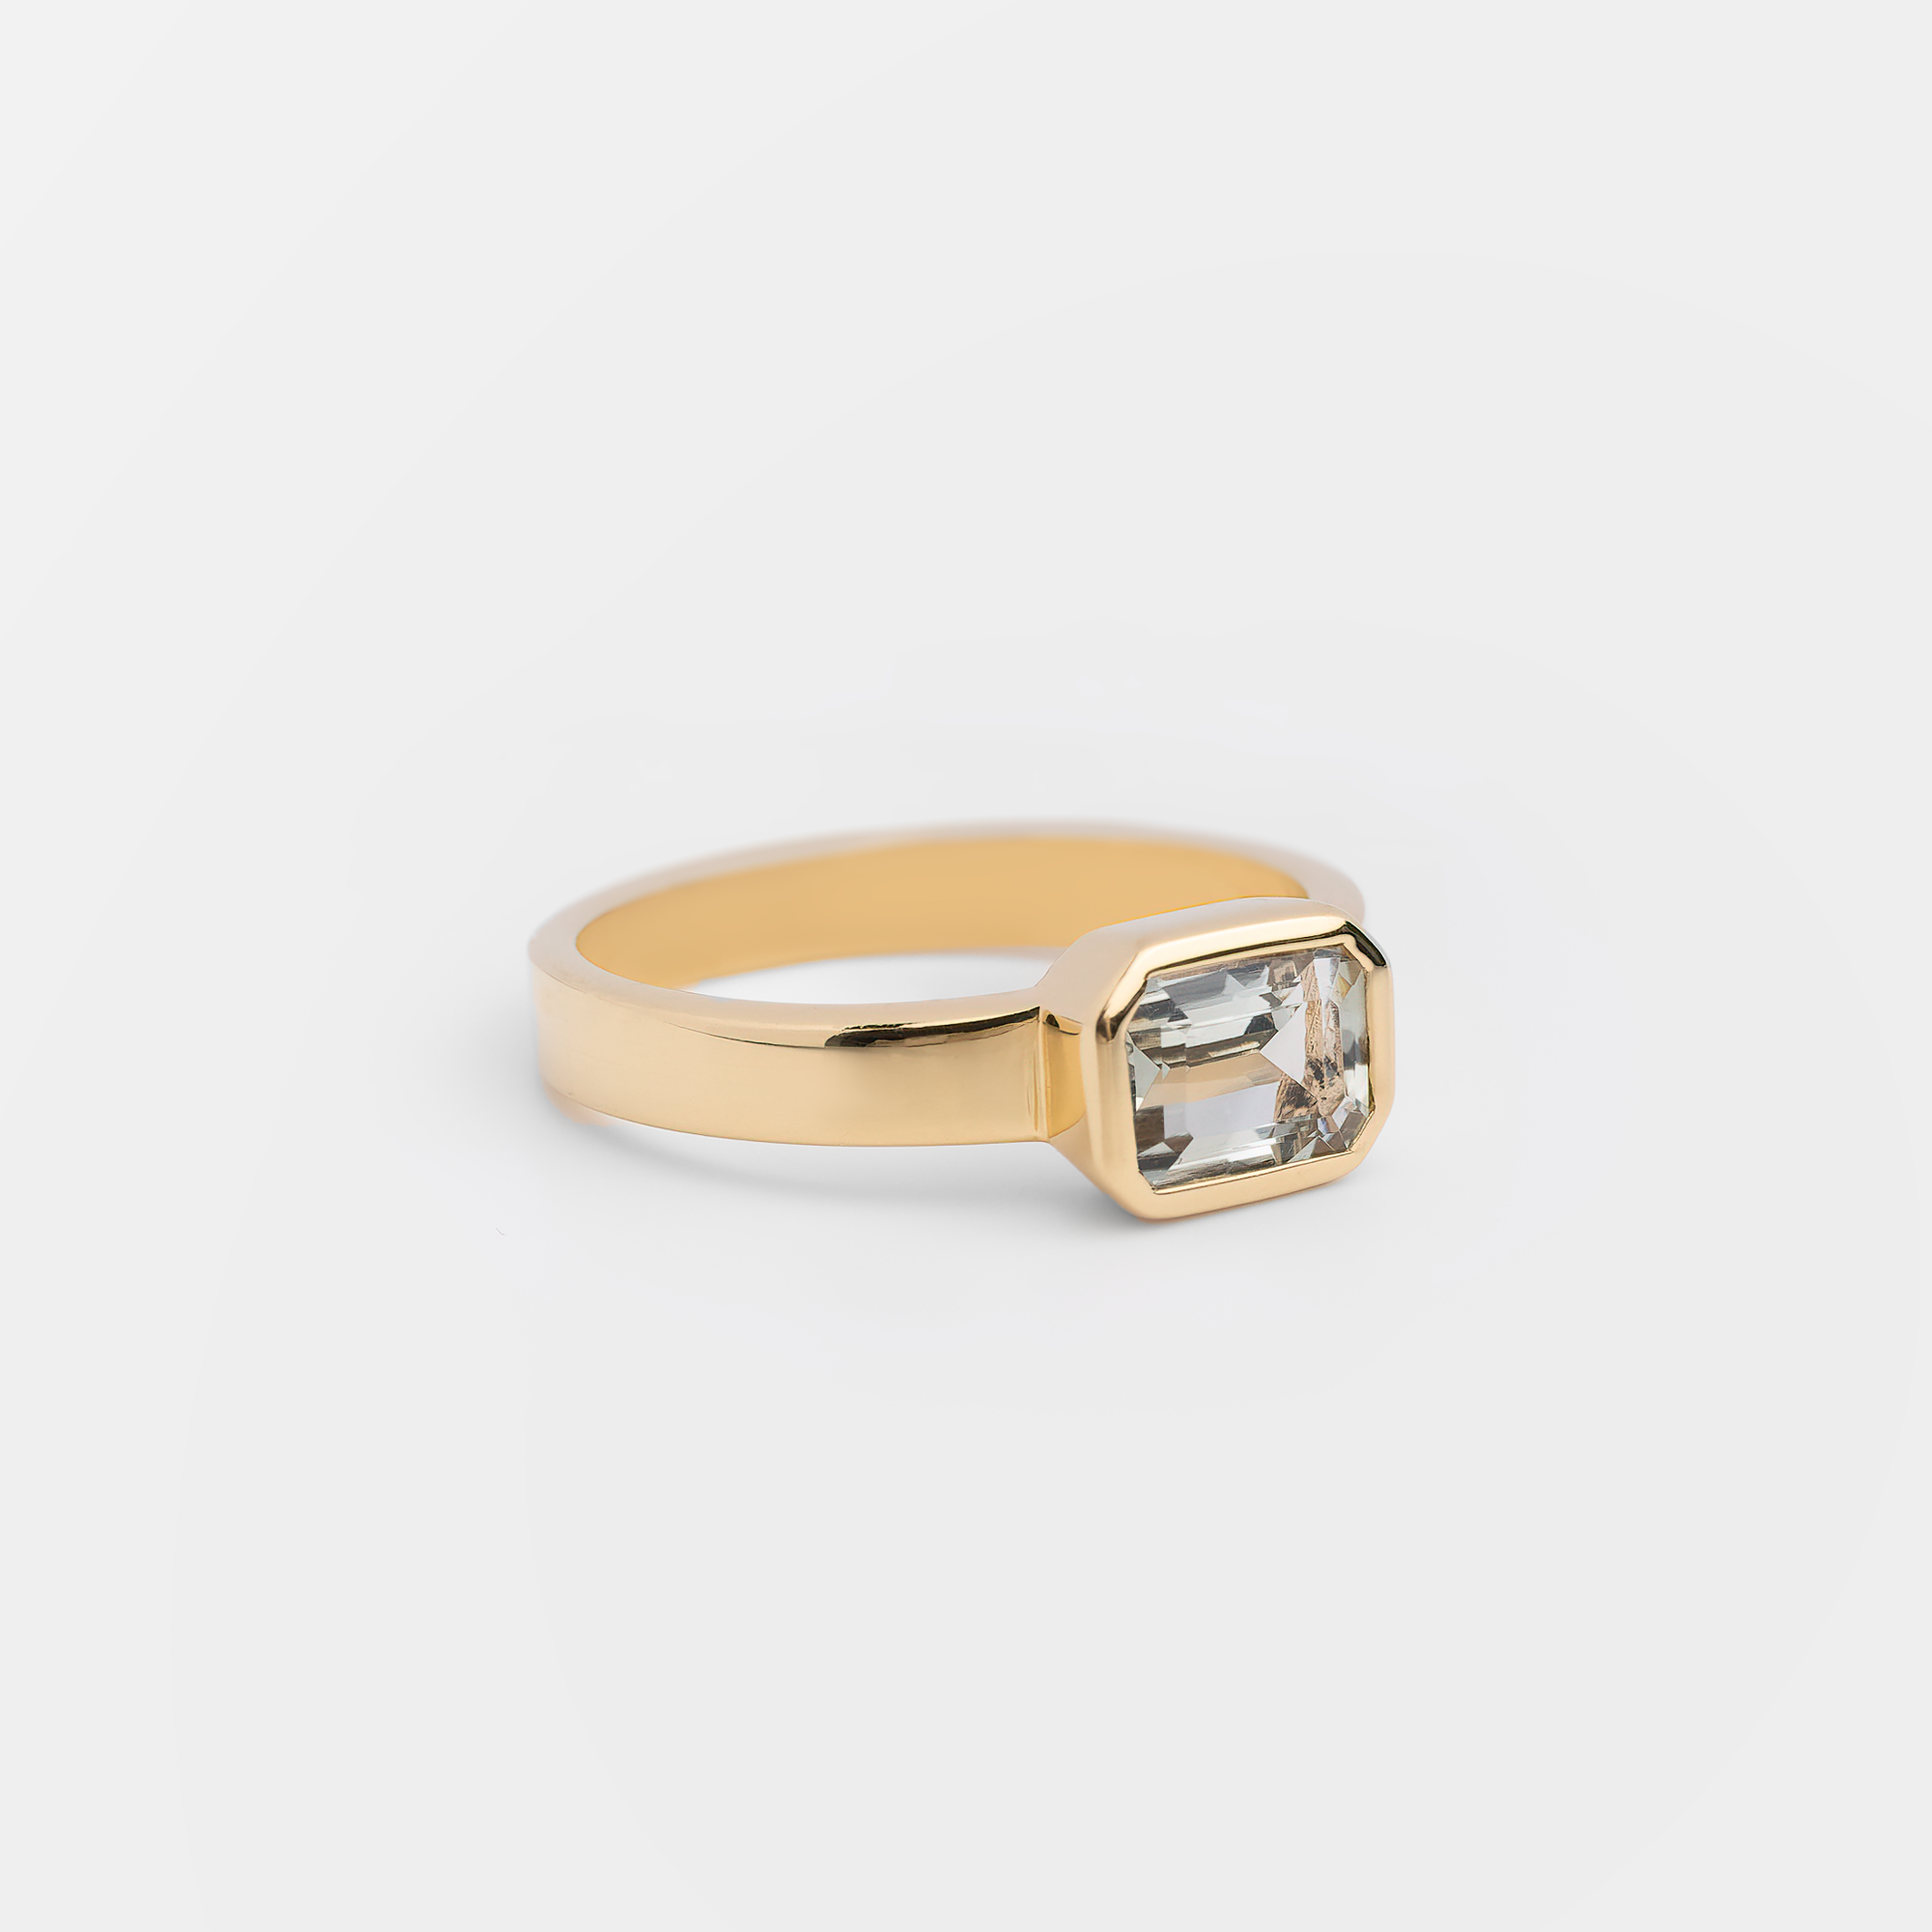 Ermont - 18K Gold Vermeil Green Amethyst Emerald Cut Ring - Zafeer